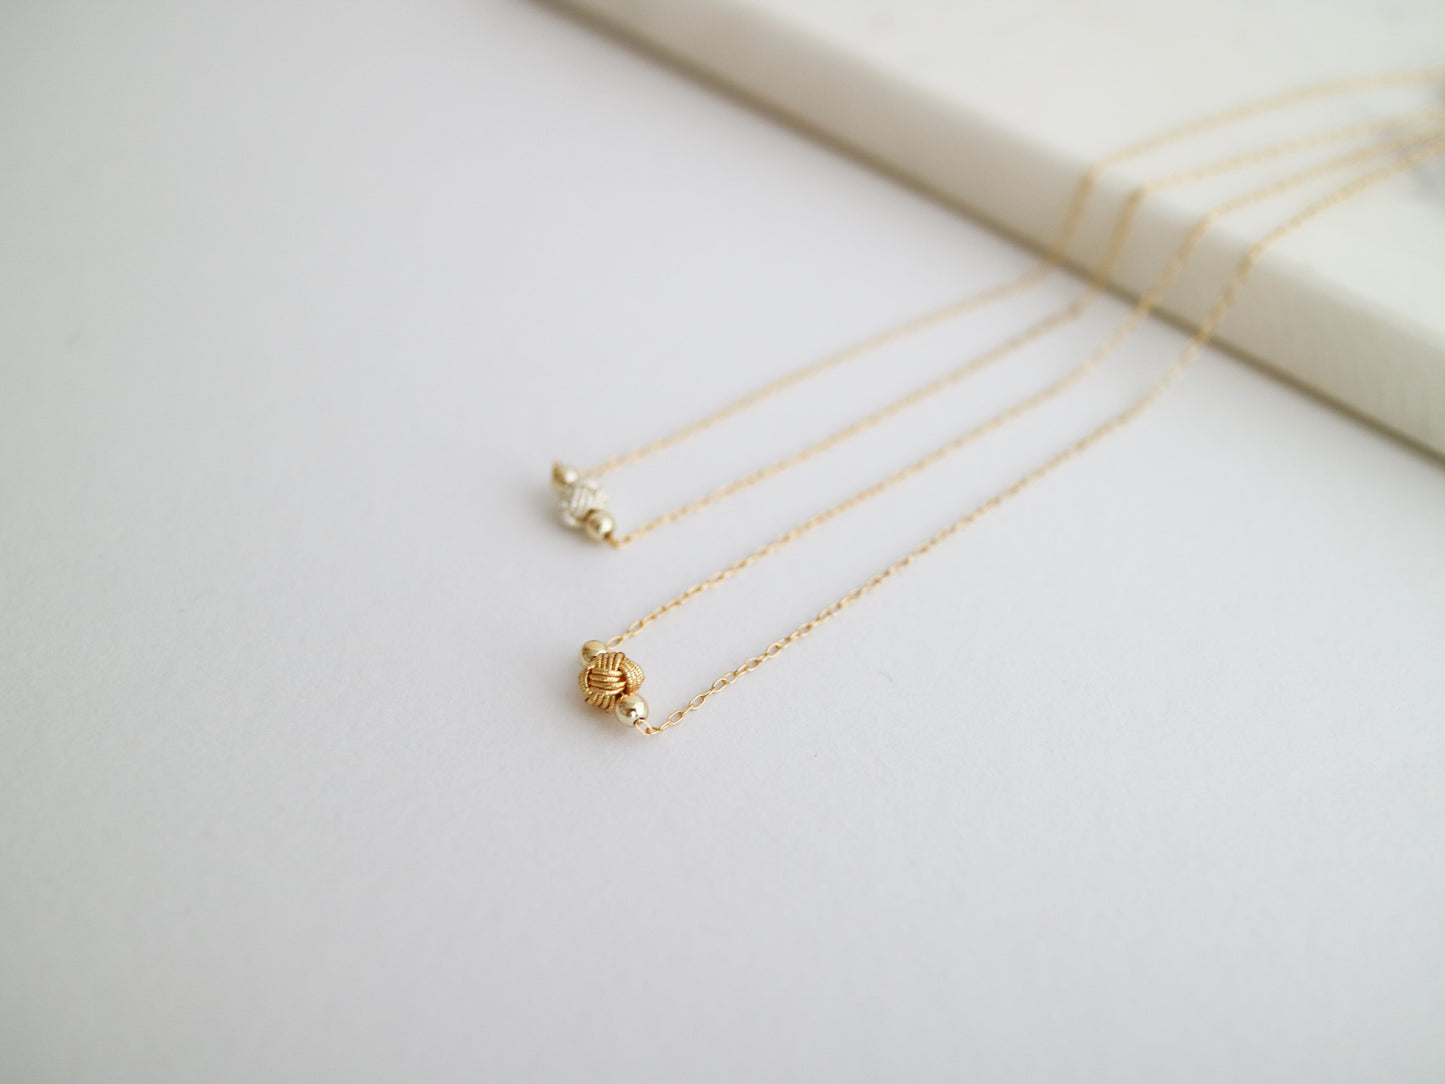 Awaji single pearl chain necklace